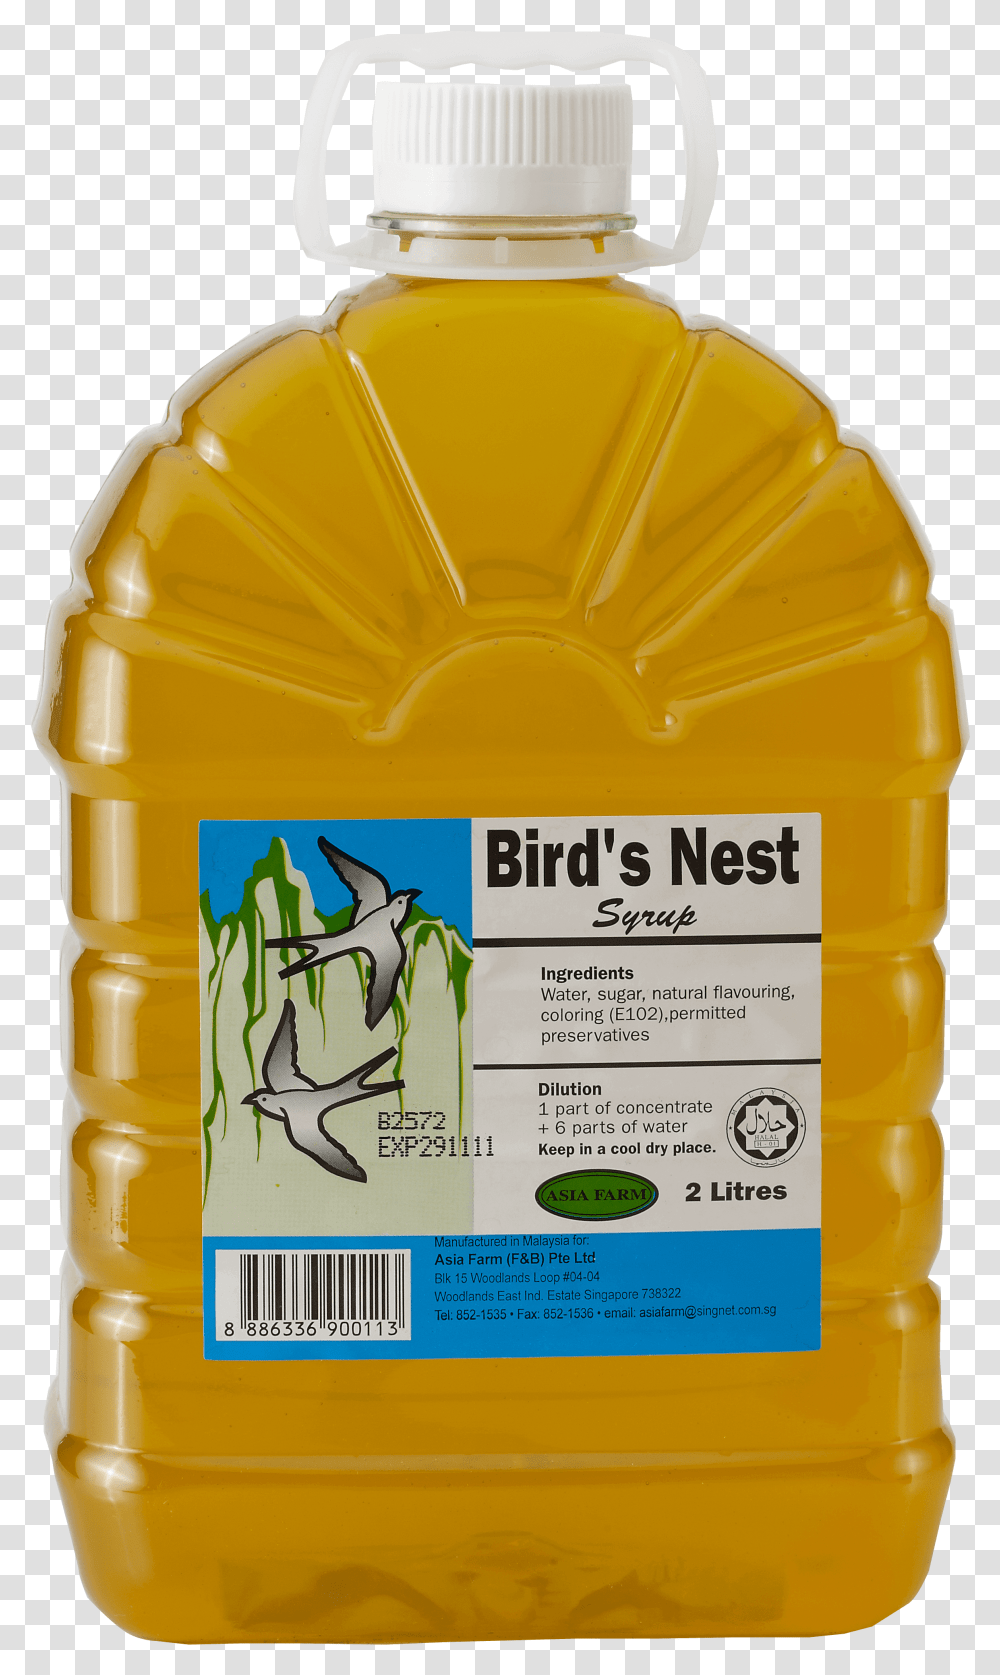 Download Bird's Nest Syrup Bird Nest Image With No Bottle, Liquor, Alcohol, Beverage, Label Transparent Png